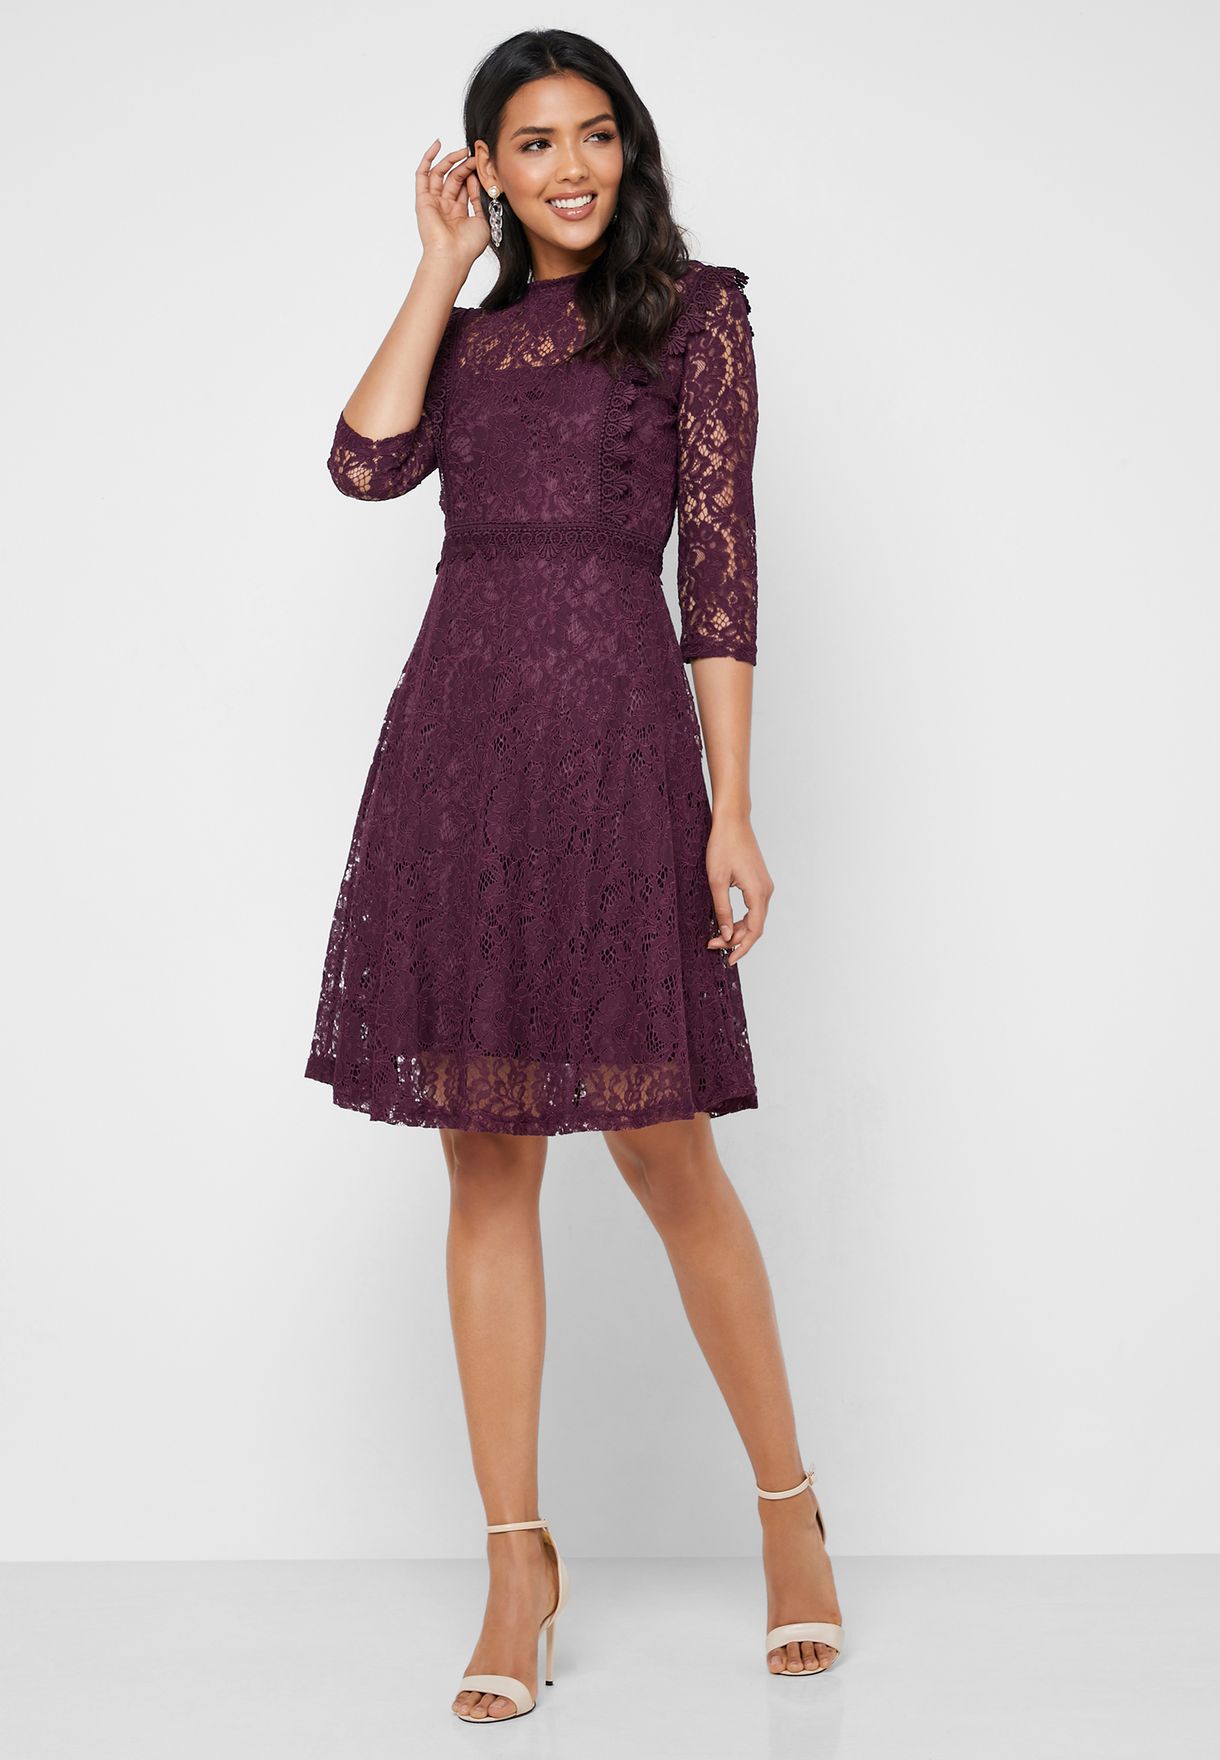 dorothy perkins purple dress